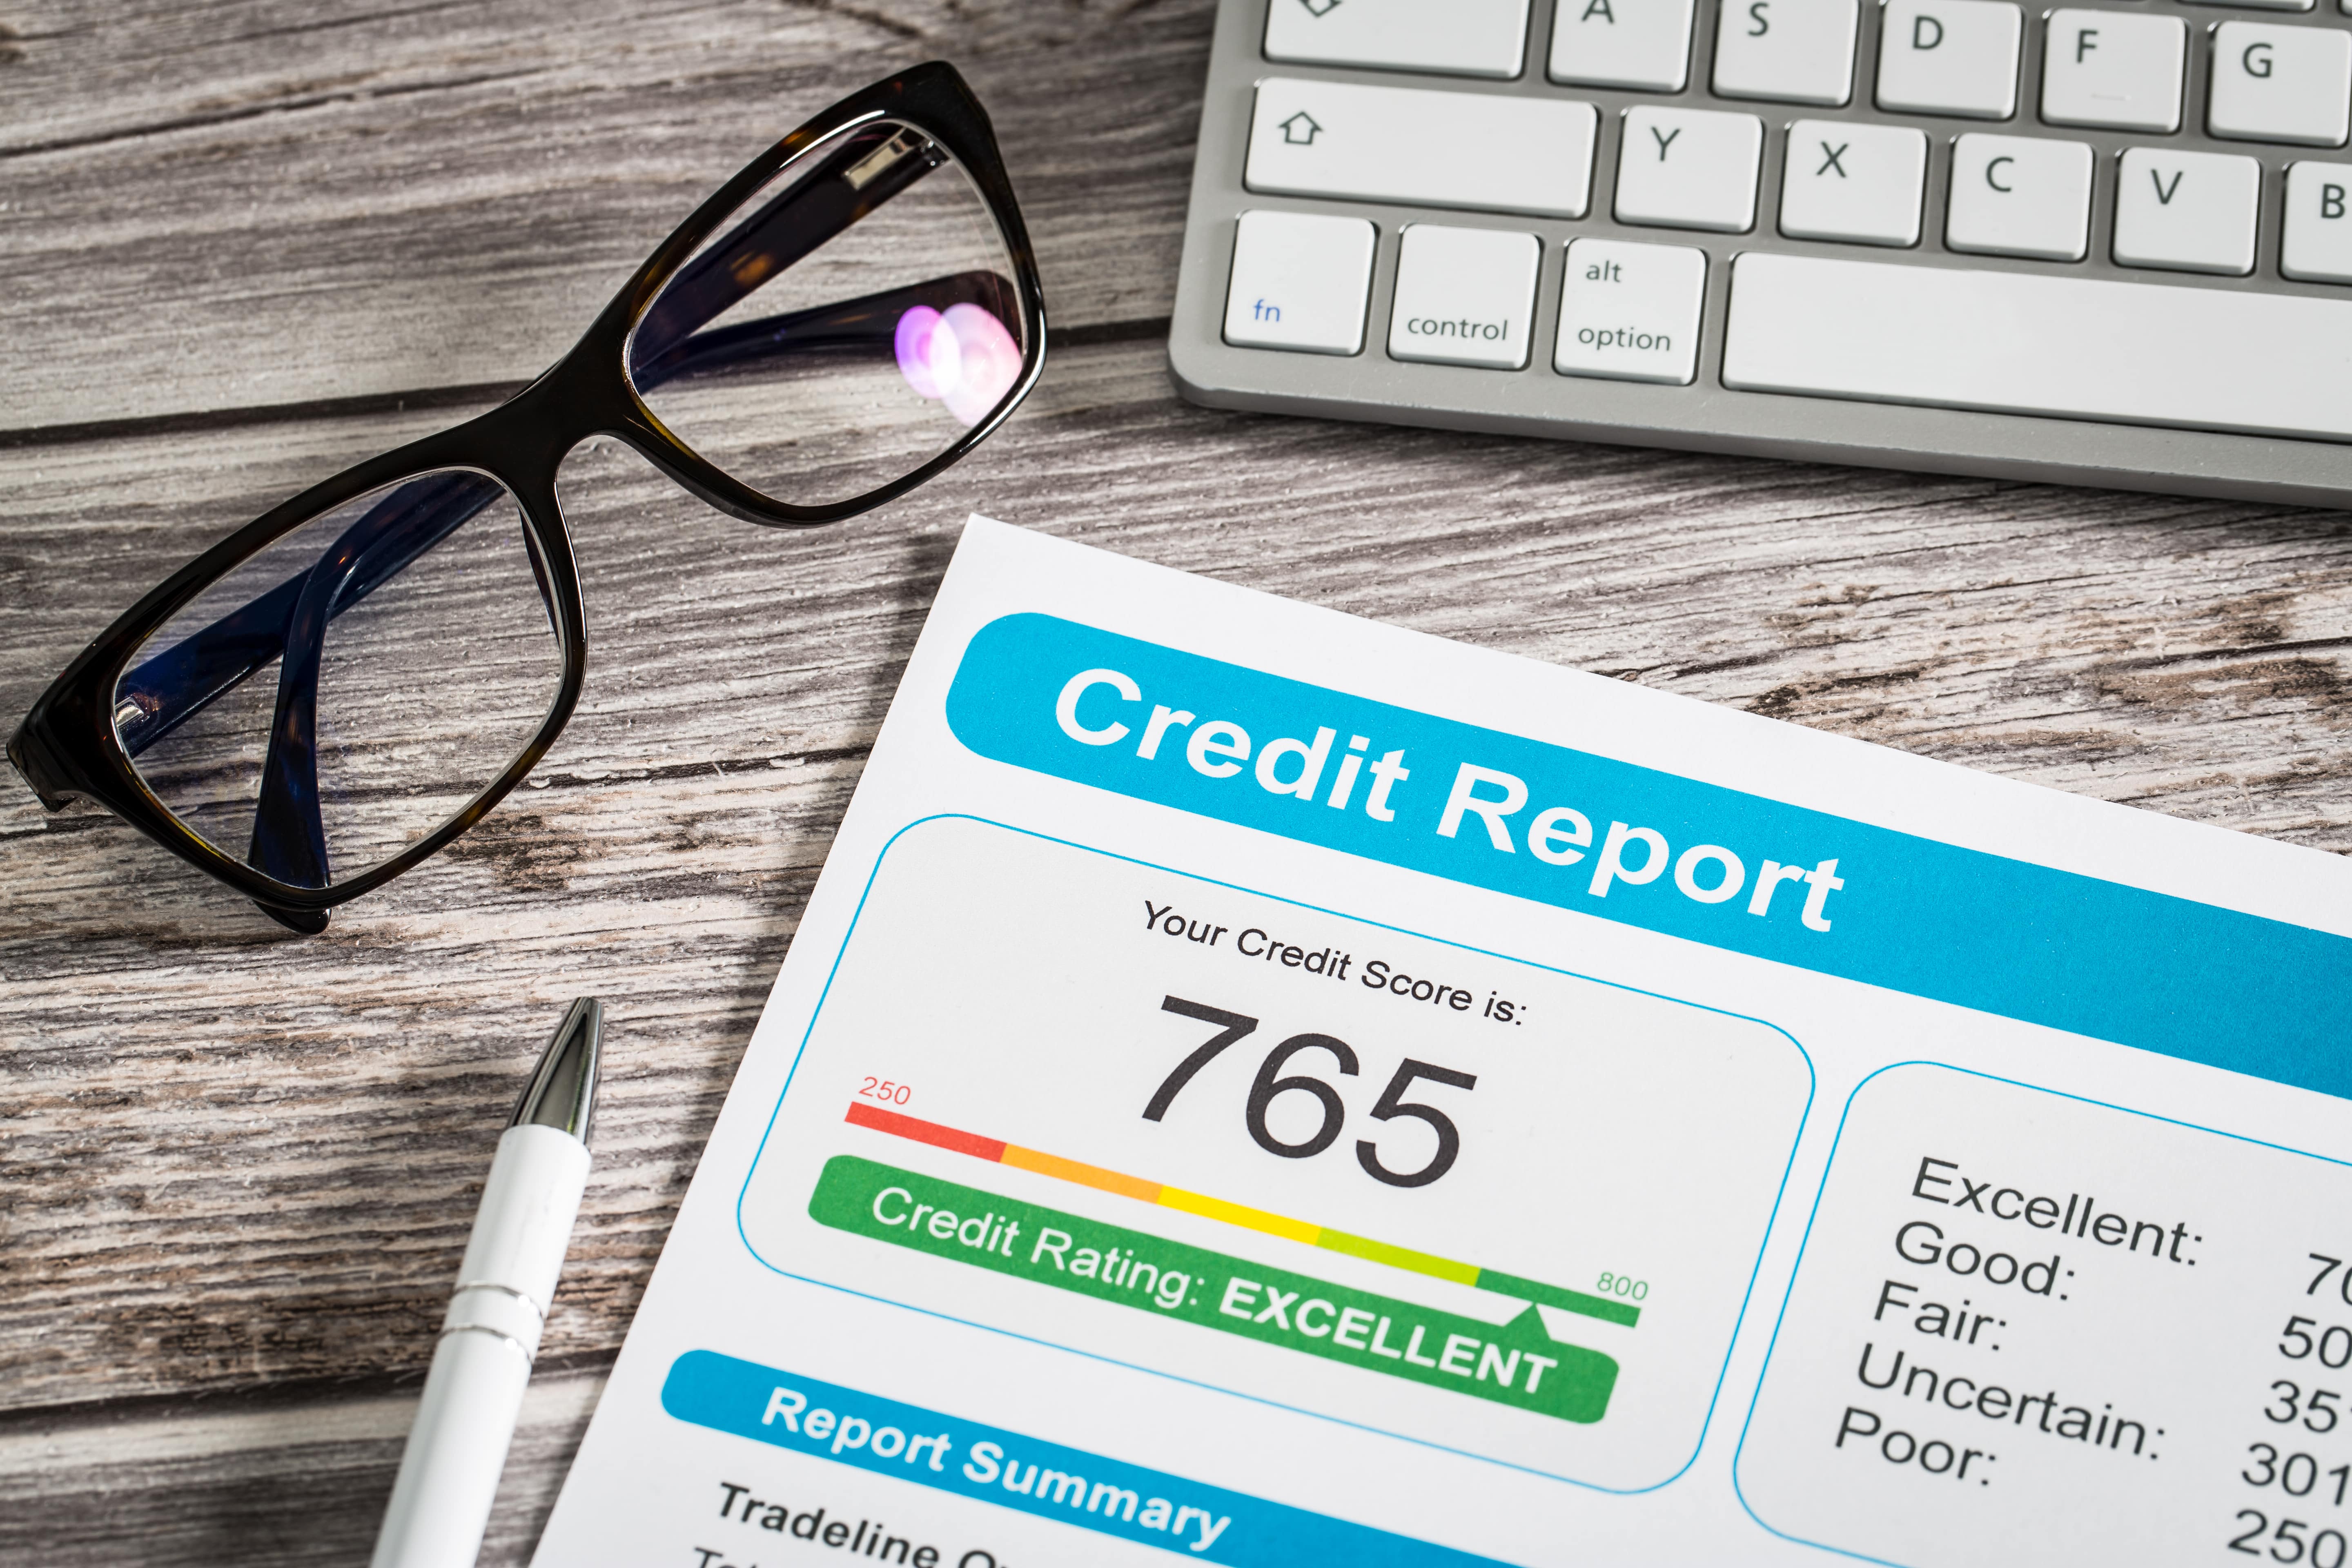 Credit Score Myths